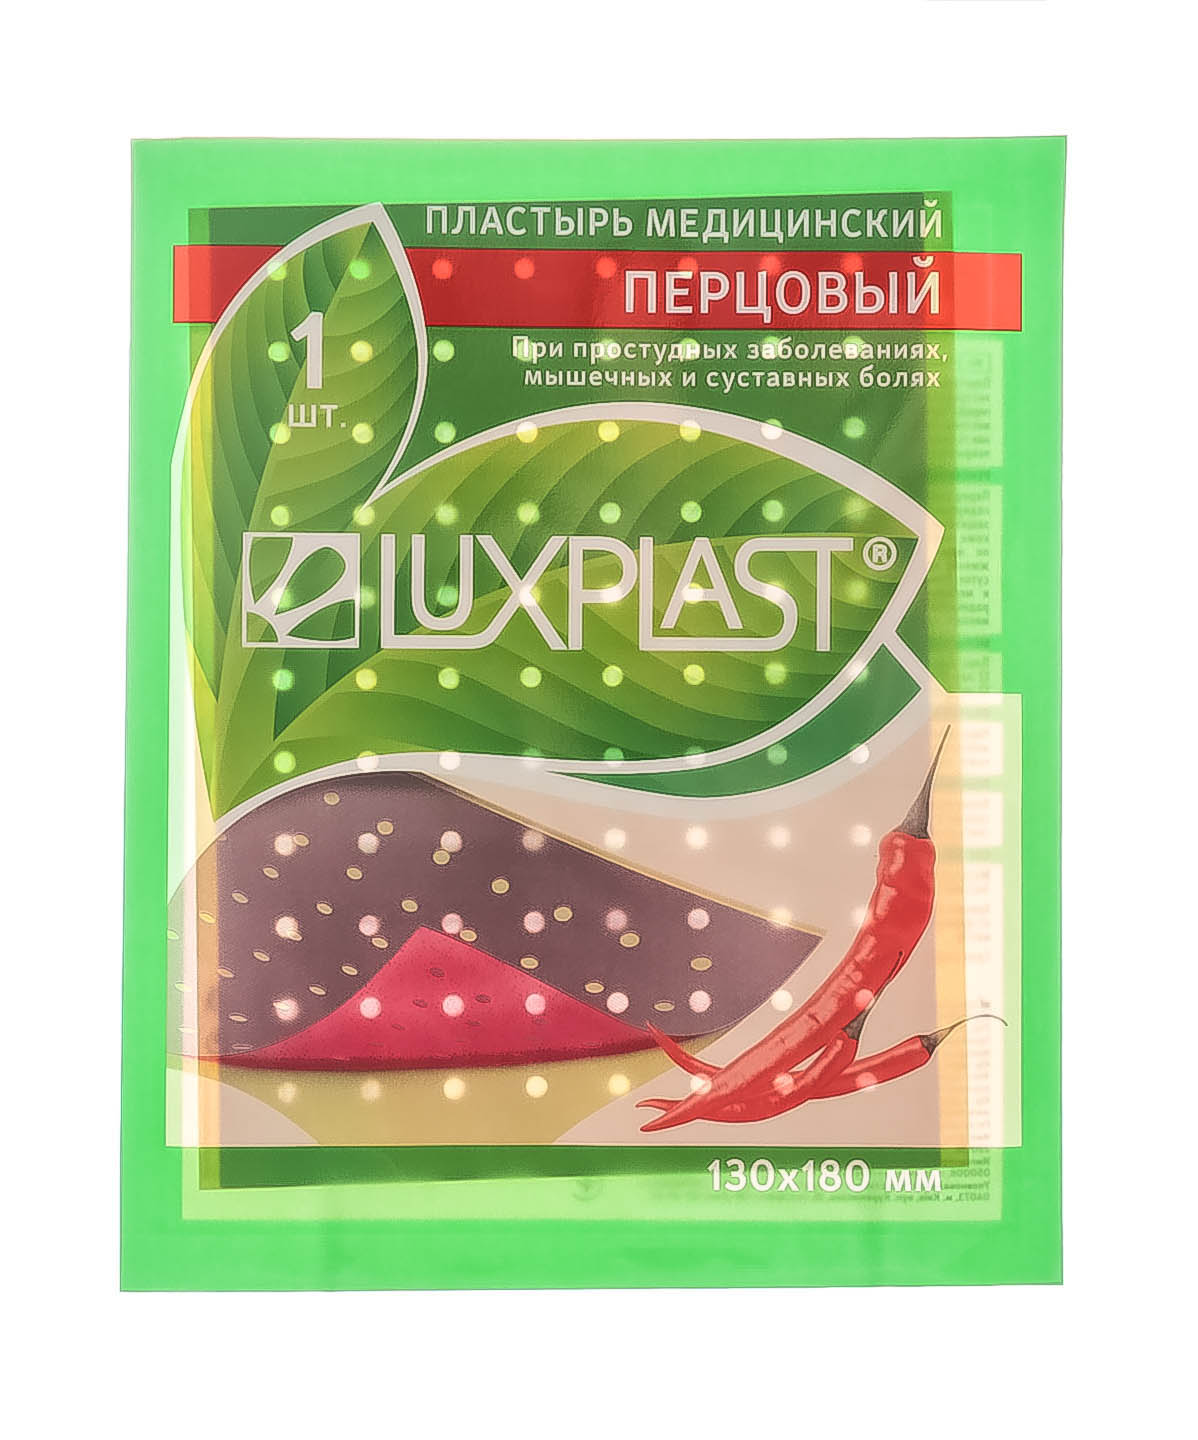 Luxplast Пластырь медицинский перцовый 130х180 мм, 1 шт (Luxplast, Пластырь)